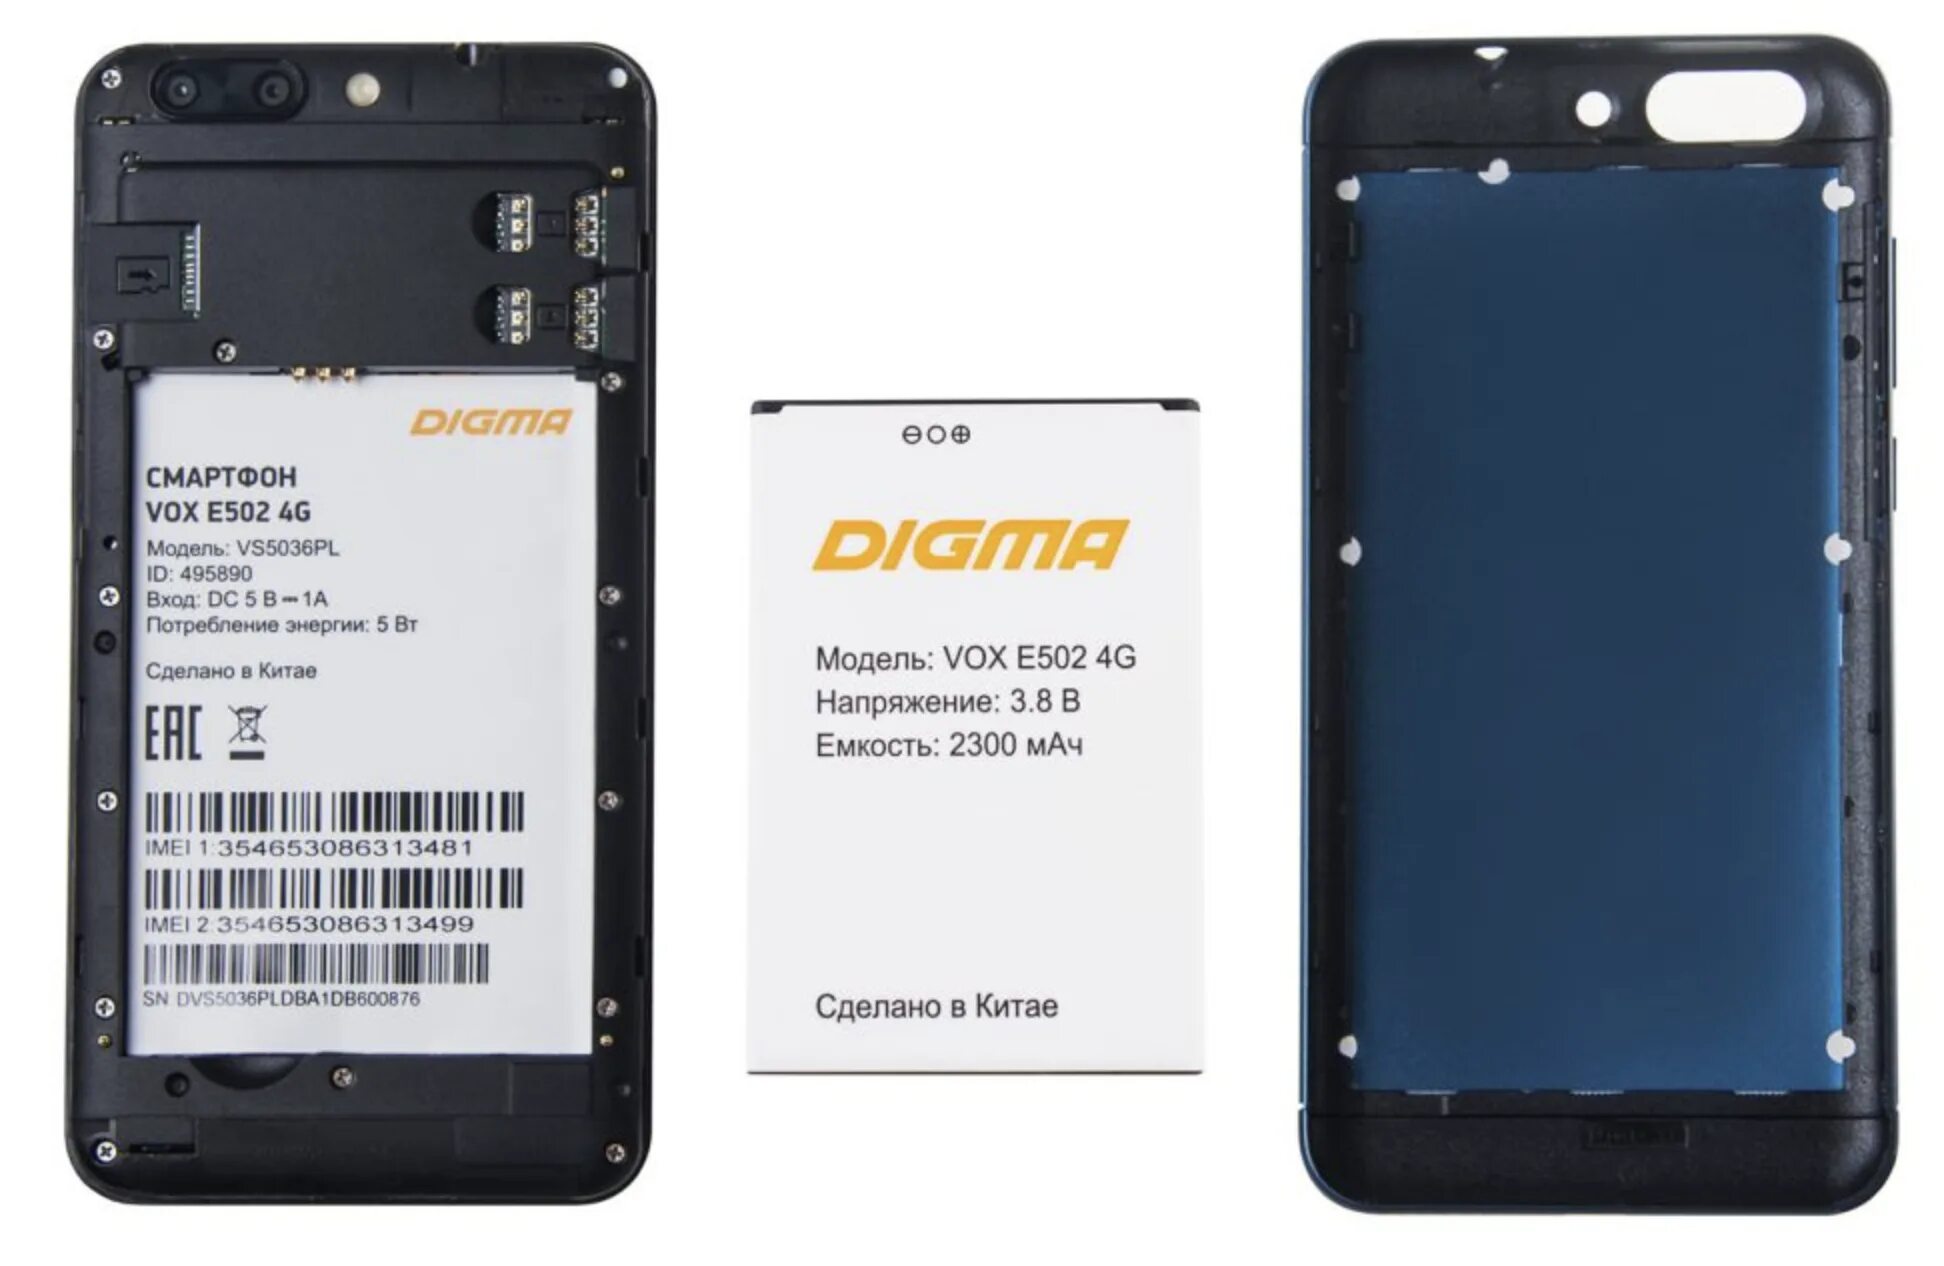 Digma vox e502 4g. Аккумулятор Digma Vox e502 4g. Смартфон Дигма Vox 502 4г. Купить аккумулятор для смартфона Digma Vox e502 4g. Digma Vox e502 4g где сим карта.